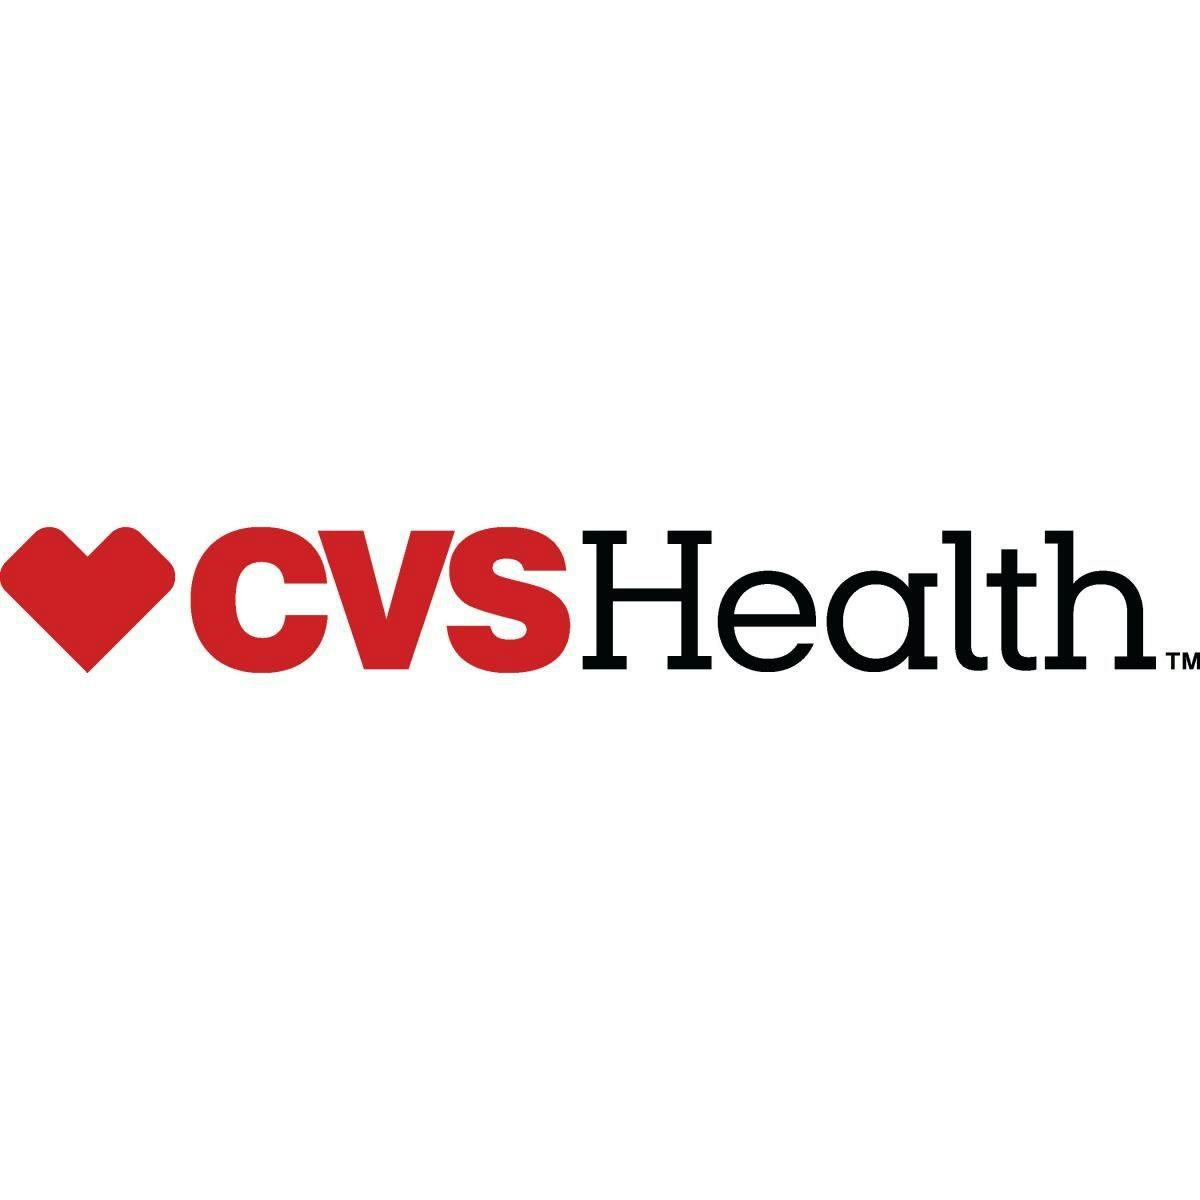 cvs health,epic,prescription drugs,hca news